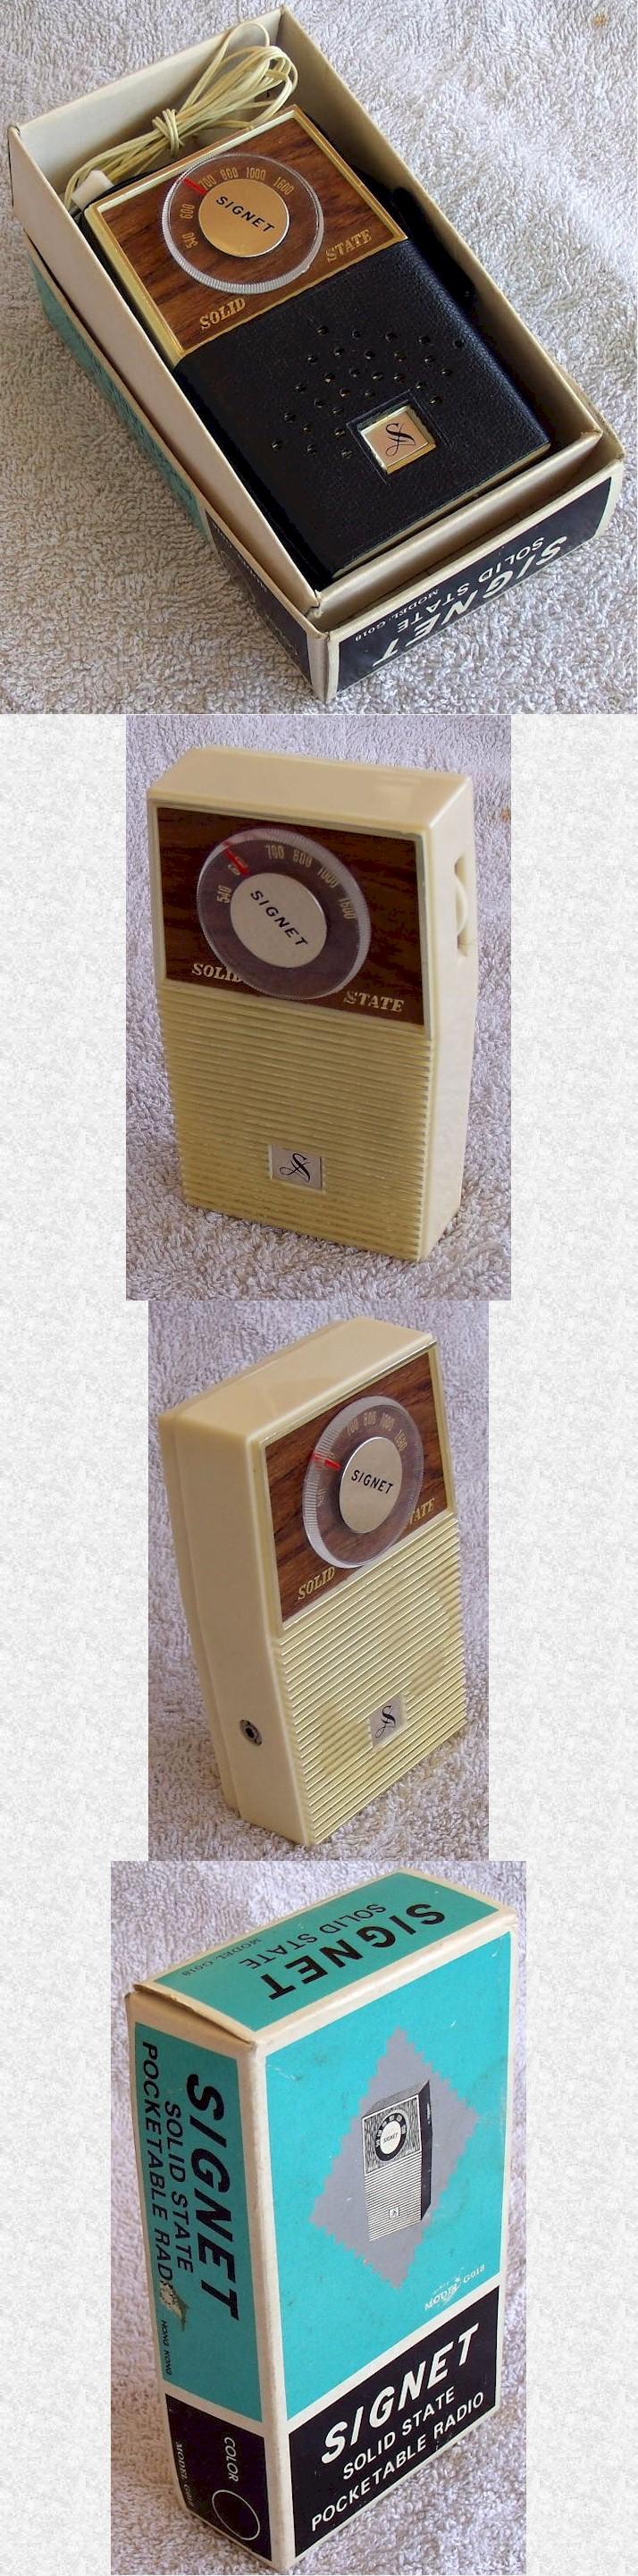 Signet Pocket Transistor Radio G018 (late 60s)